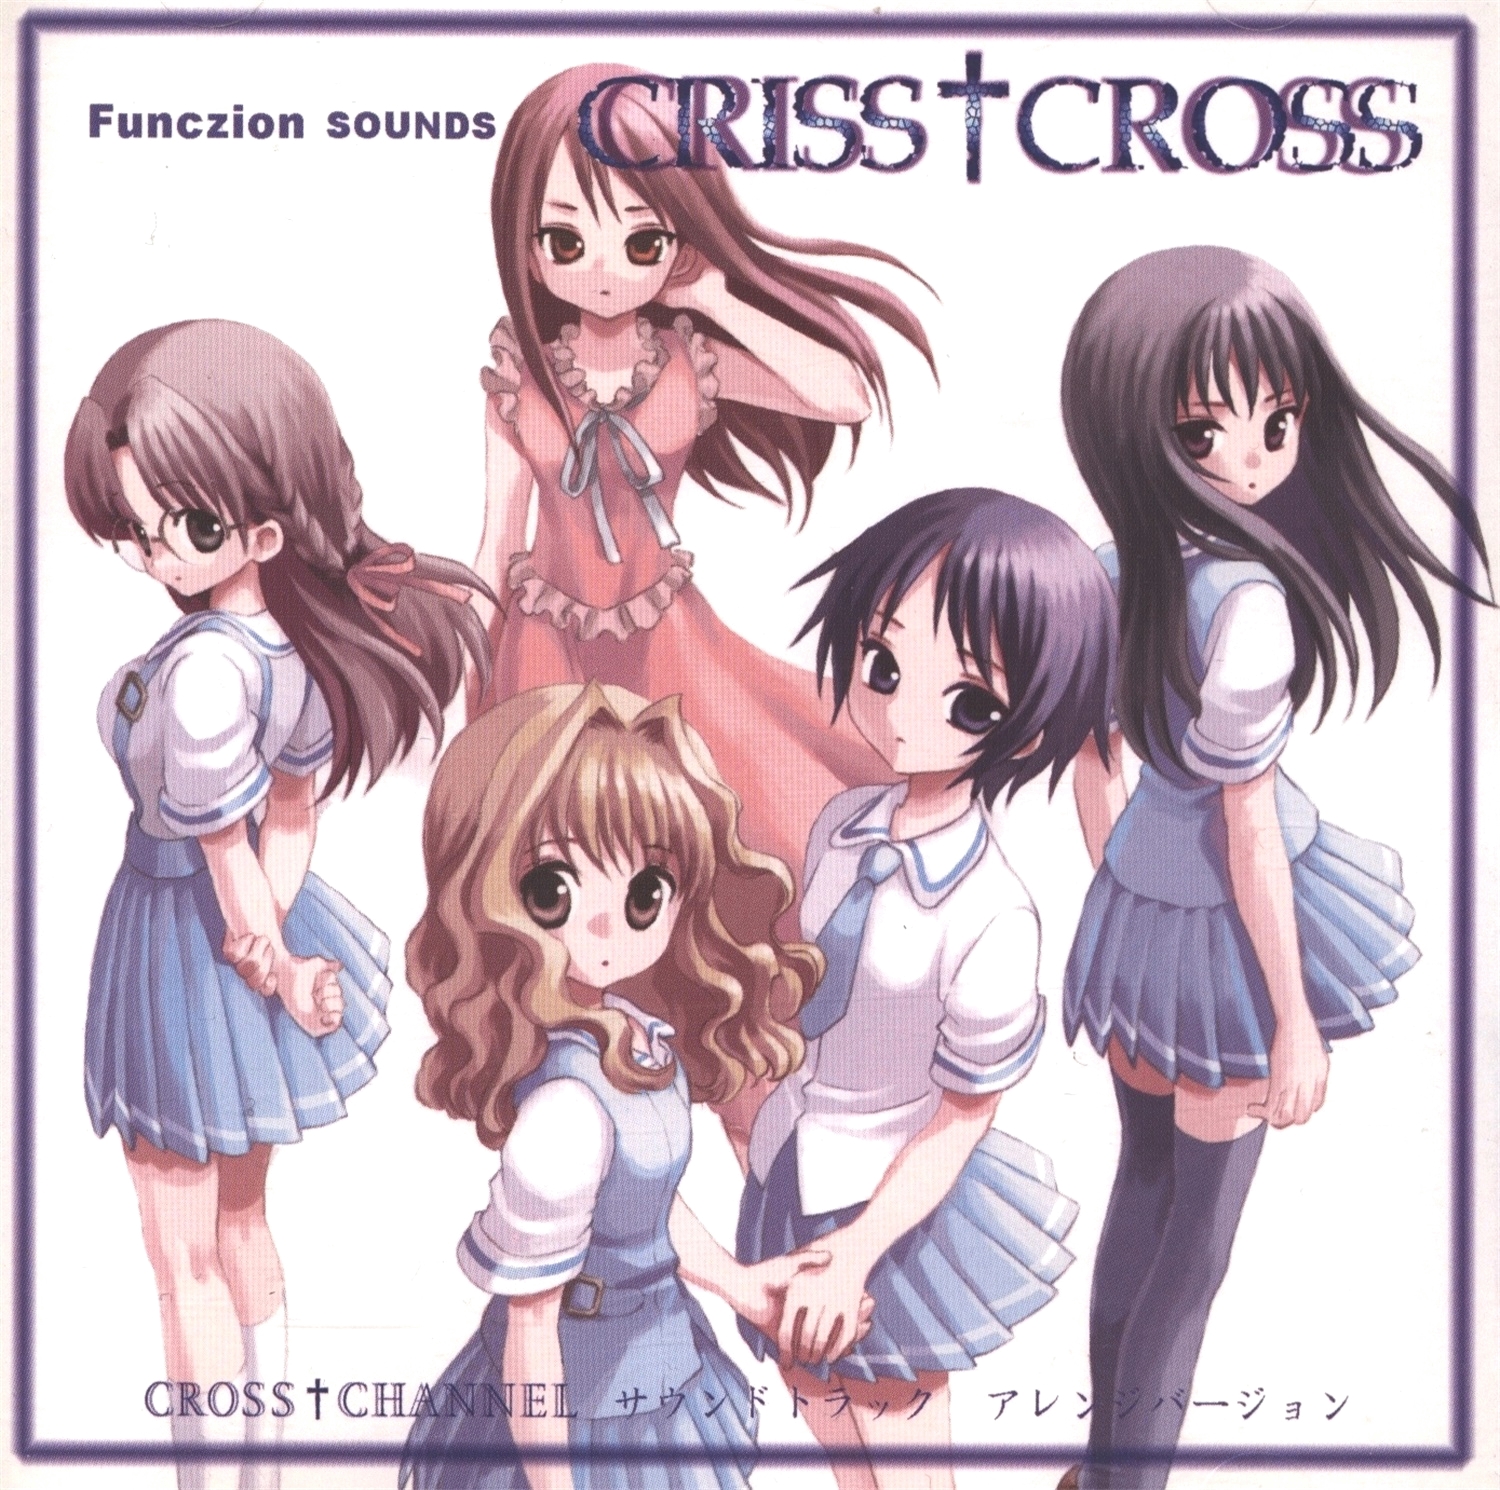 【WAV】ゲーム「CROSS†CHANNEL」Sound Track Arrange Version「CRISS†CROSS」／Funczion SOUNDS